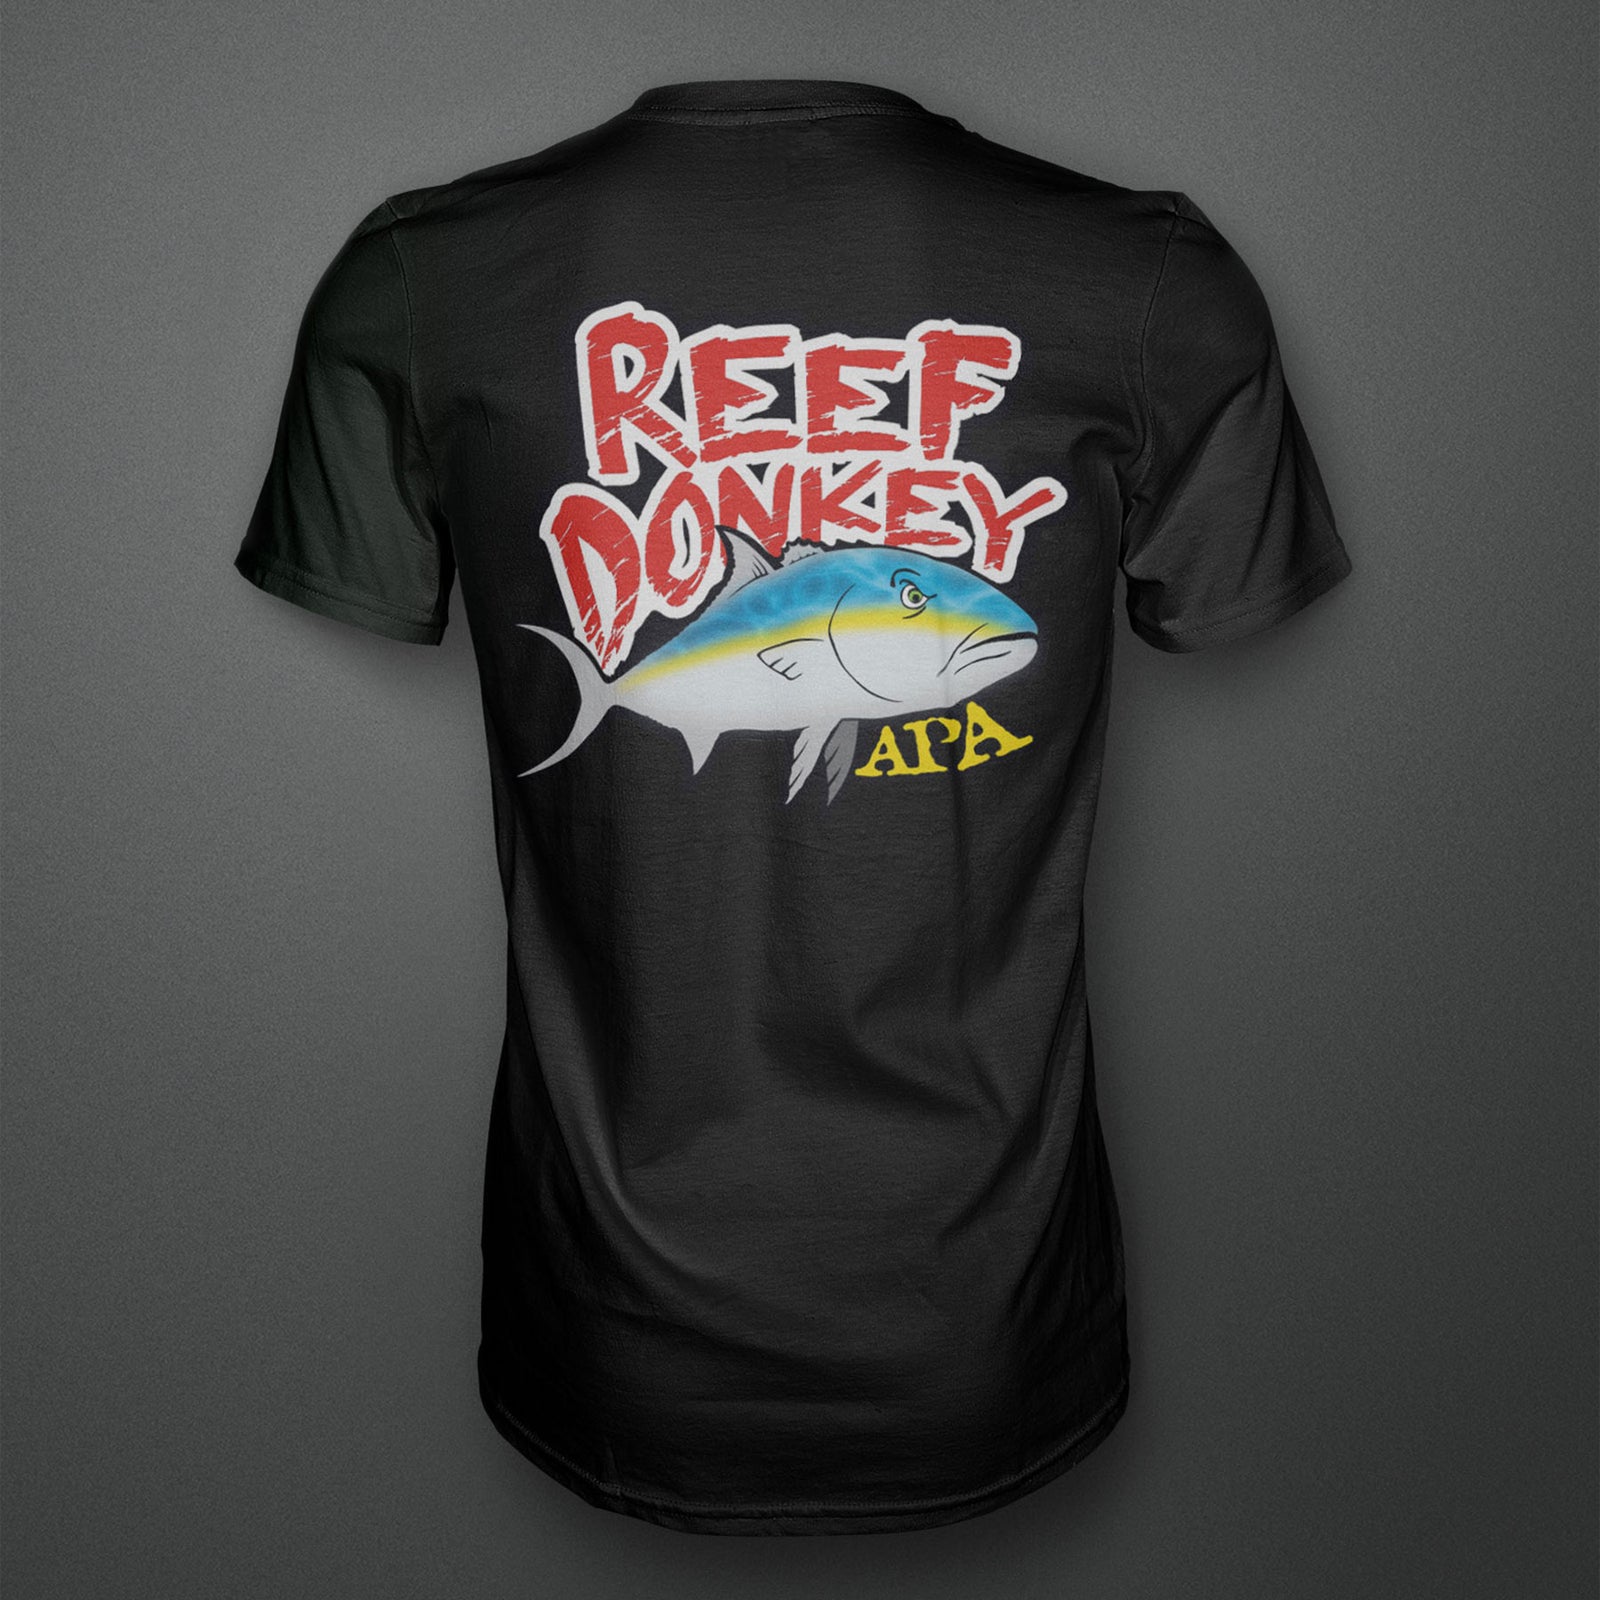 Reef Donkey T-Shirt - Black